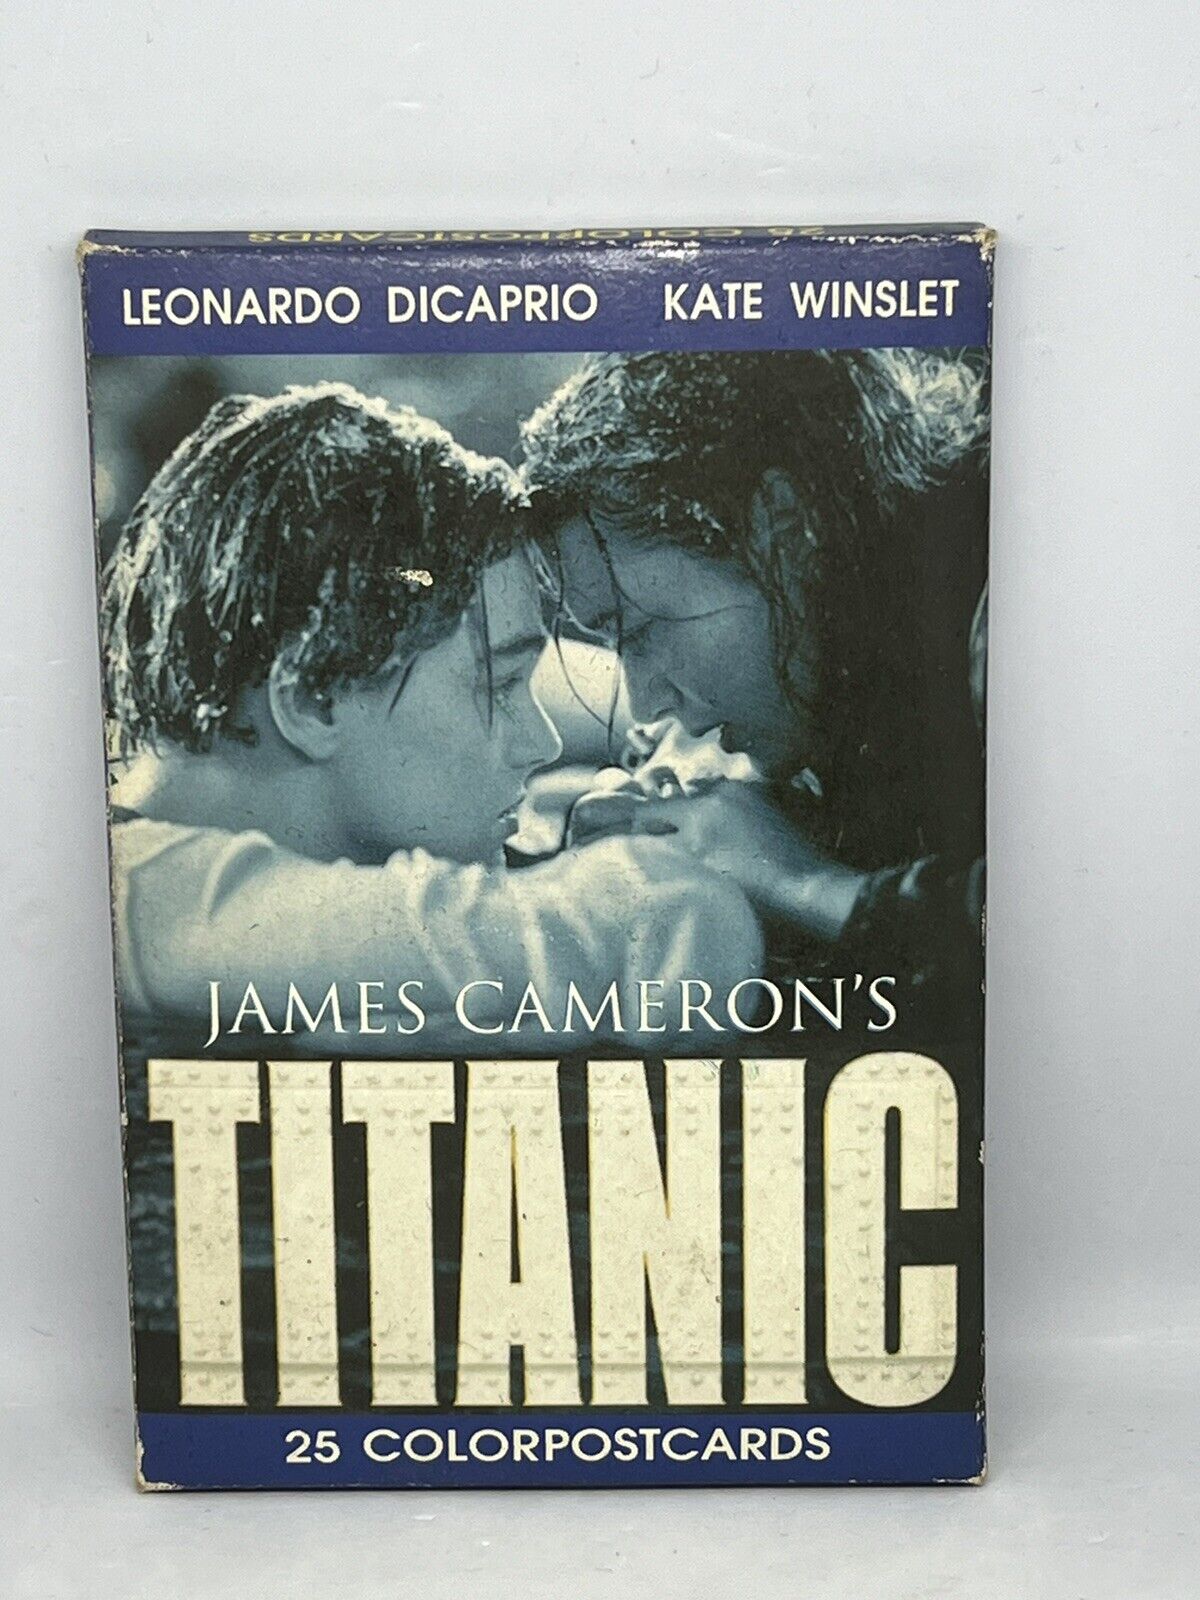 James Cameron’s Titanic 25 Color Post Cards 1997 Leonardo Dicaprio Kate Winslet